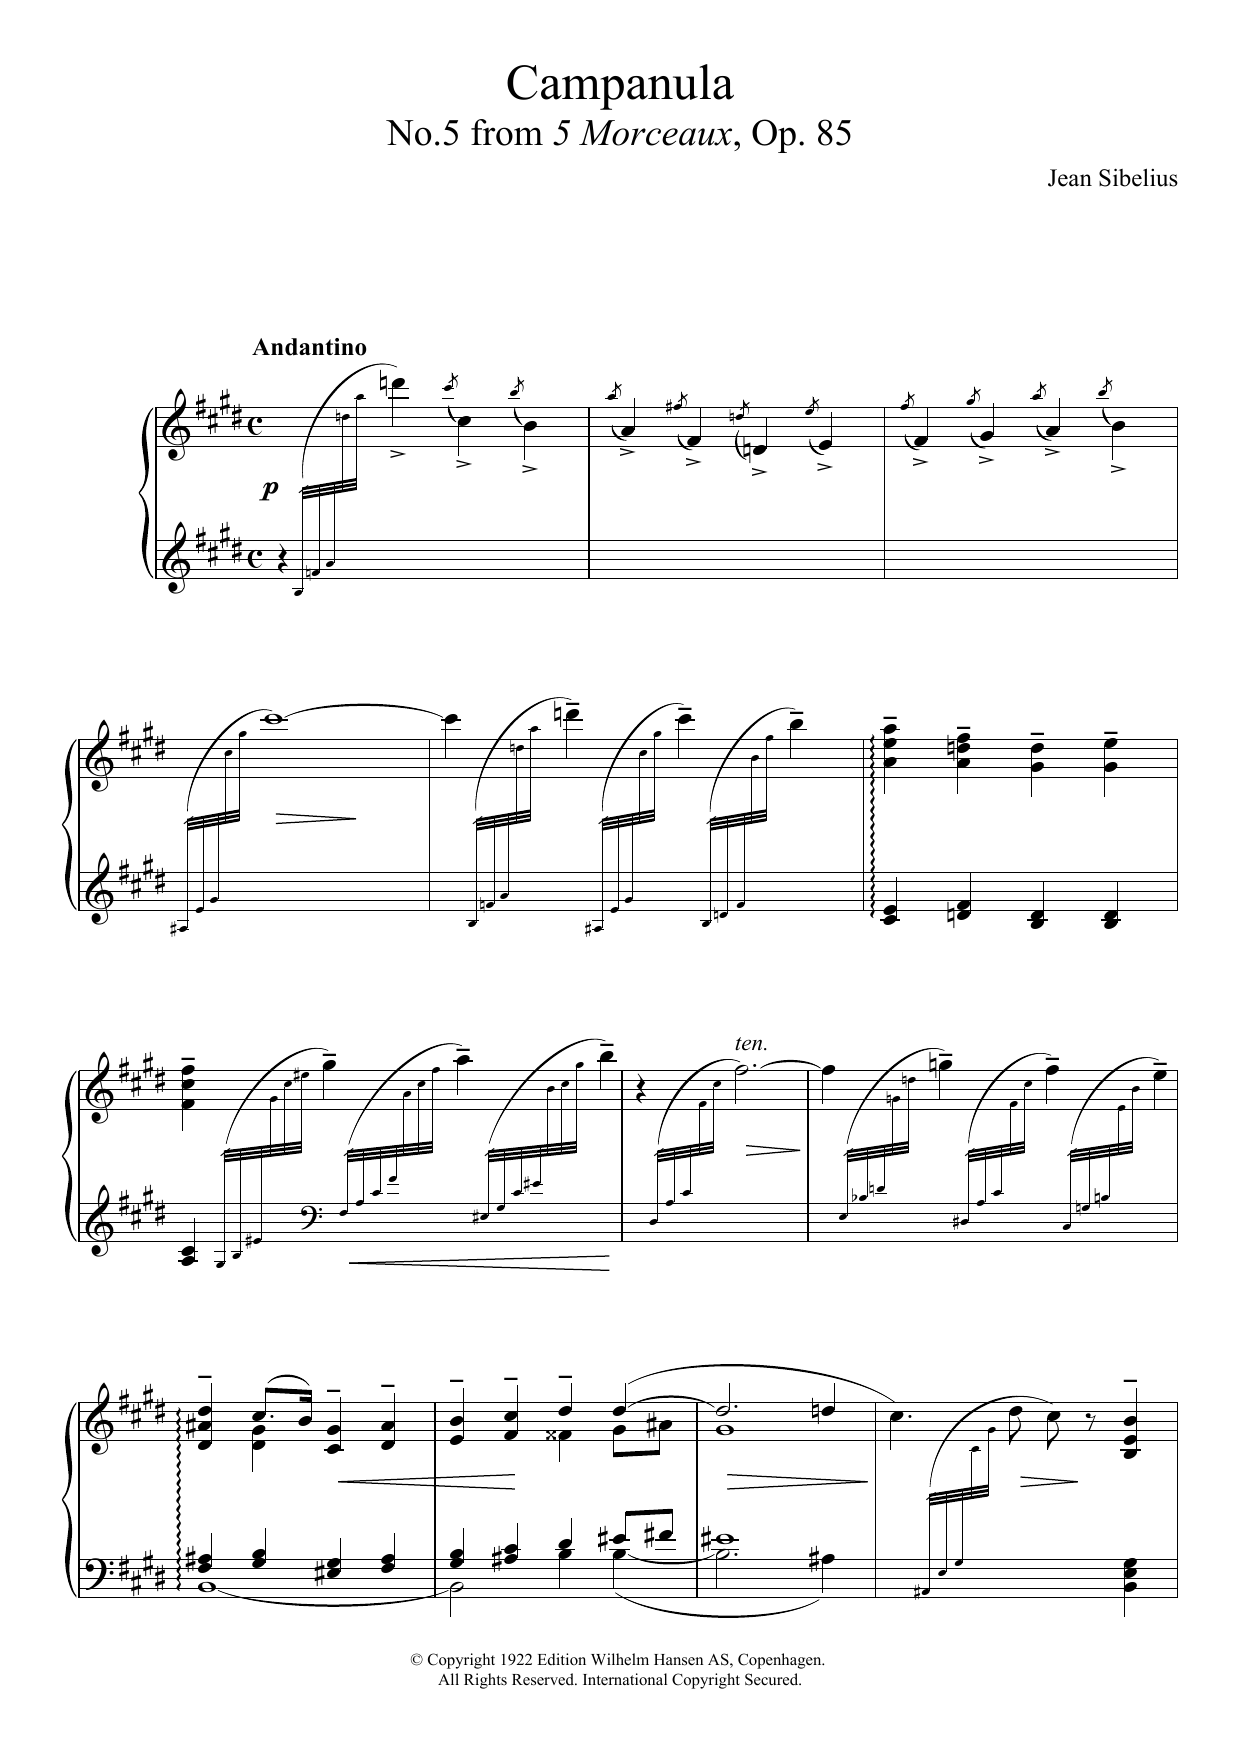 Download Jean Sibelius 5 Morceaux, Op.85 - V. Campanula Sheet Music